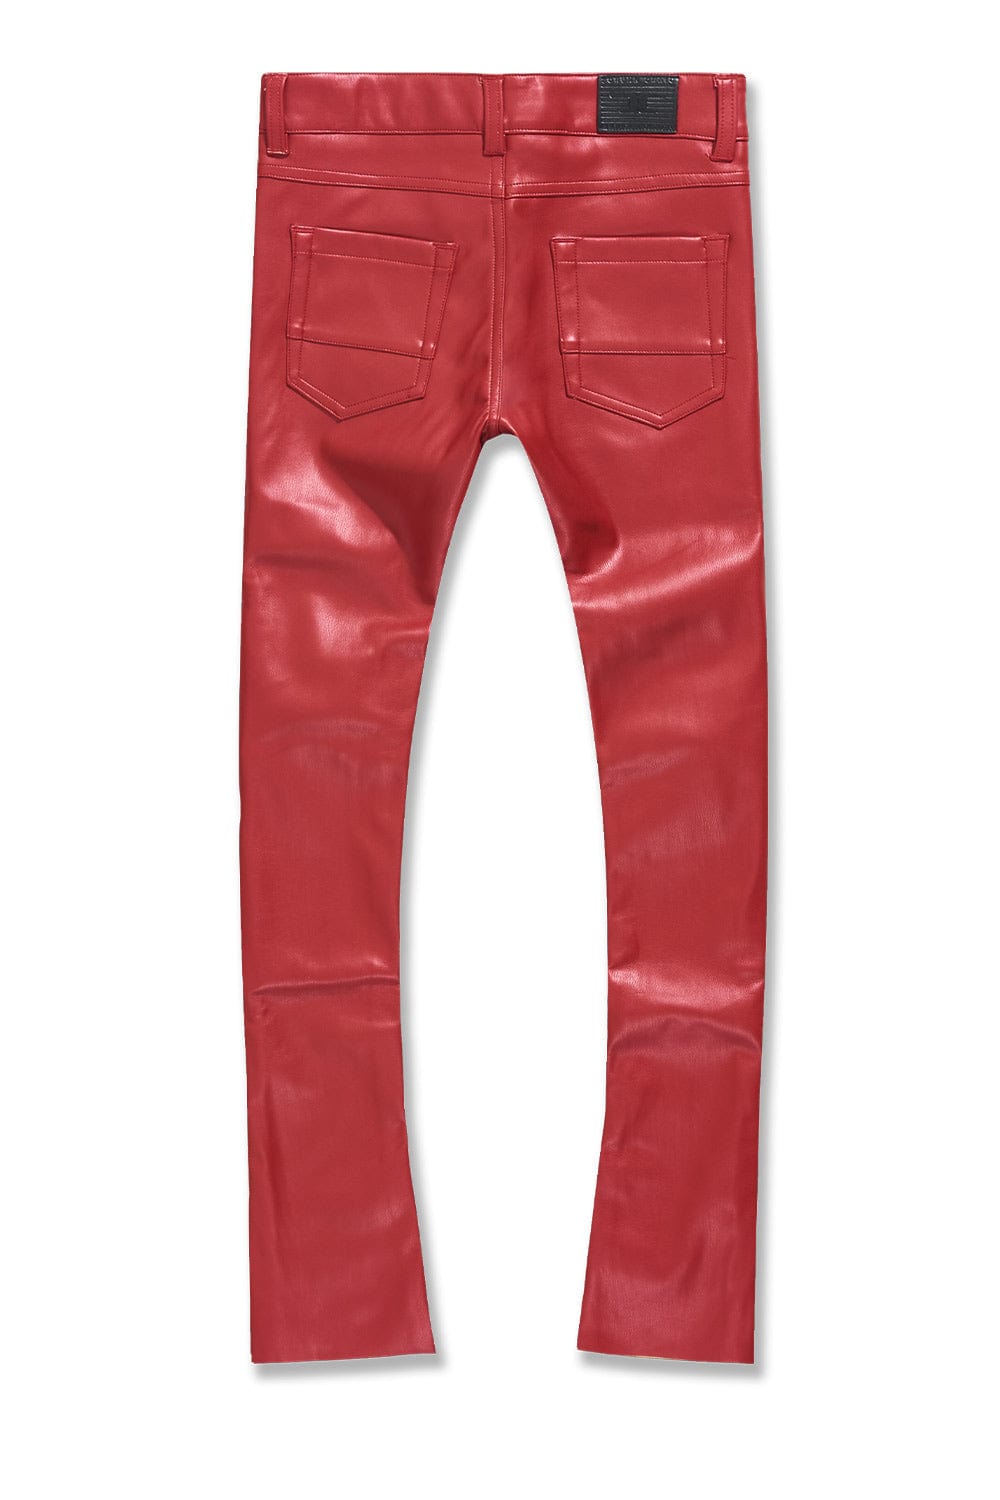 JC Kids Kids Stacked Thriller Pants (Red)